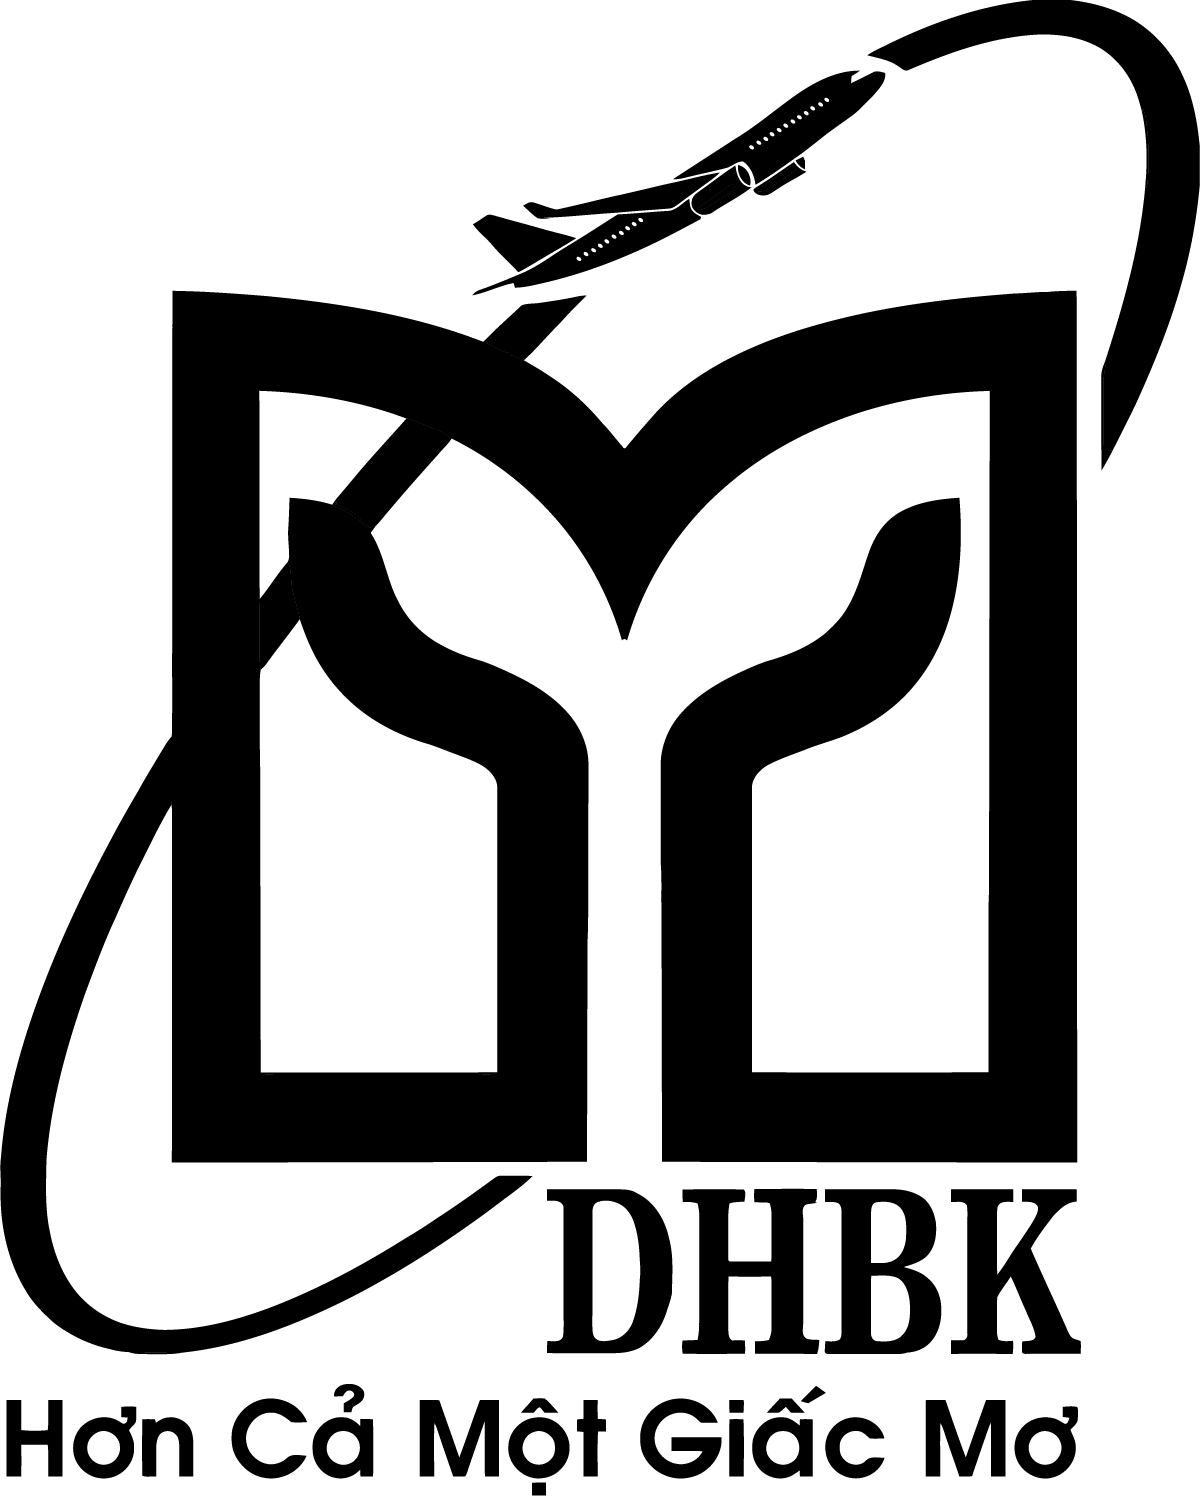 Logo Truong Trung cap Bach khoa Vung Tau am ban